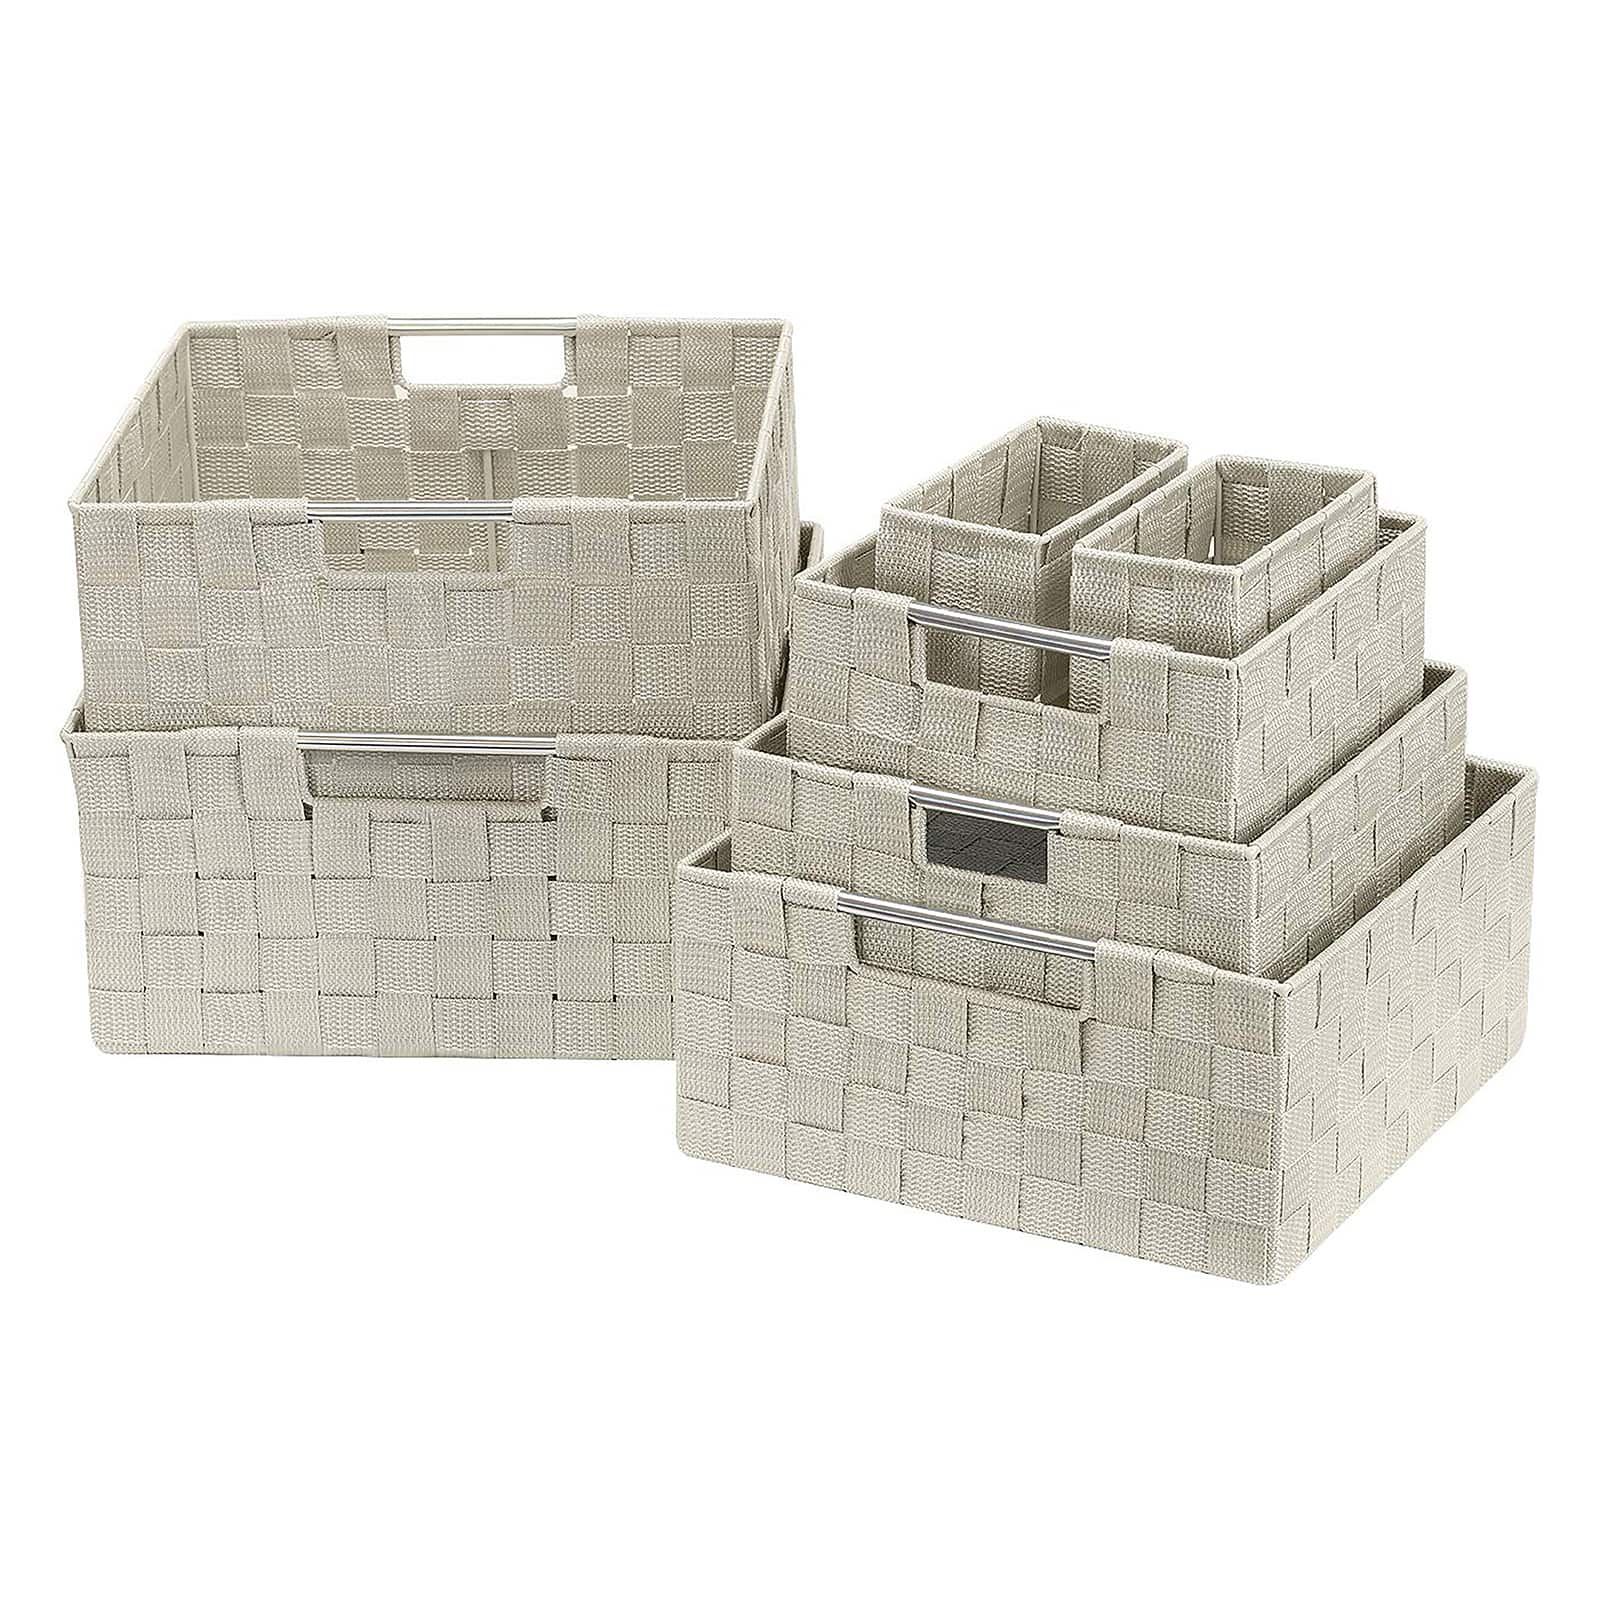 Sorbus 7-Piece Stackable Tote Basket Set with Handles